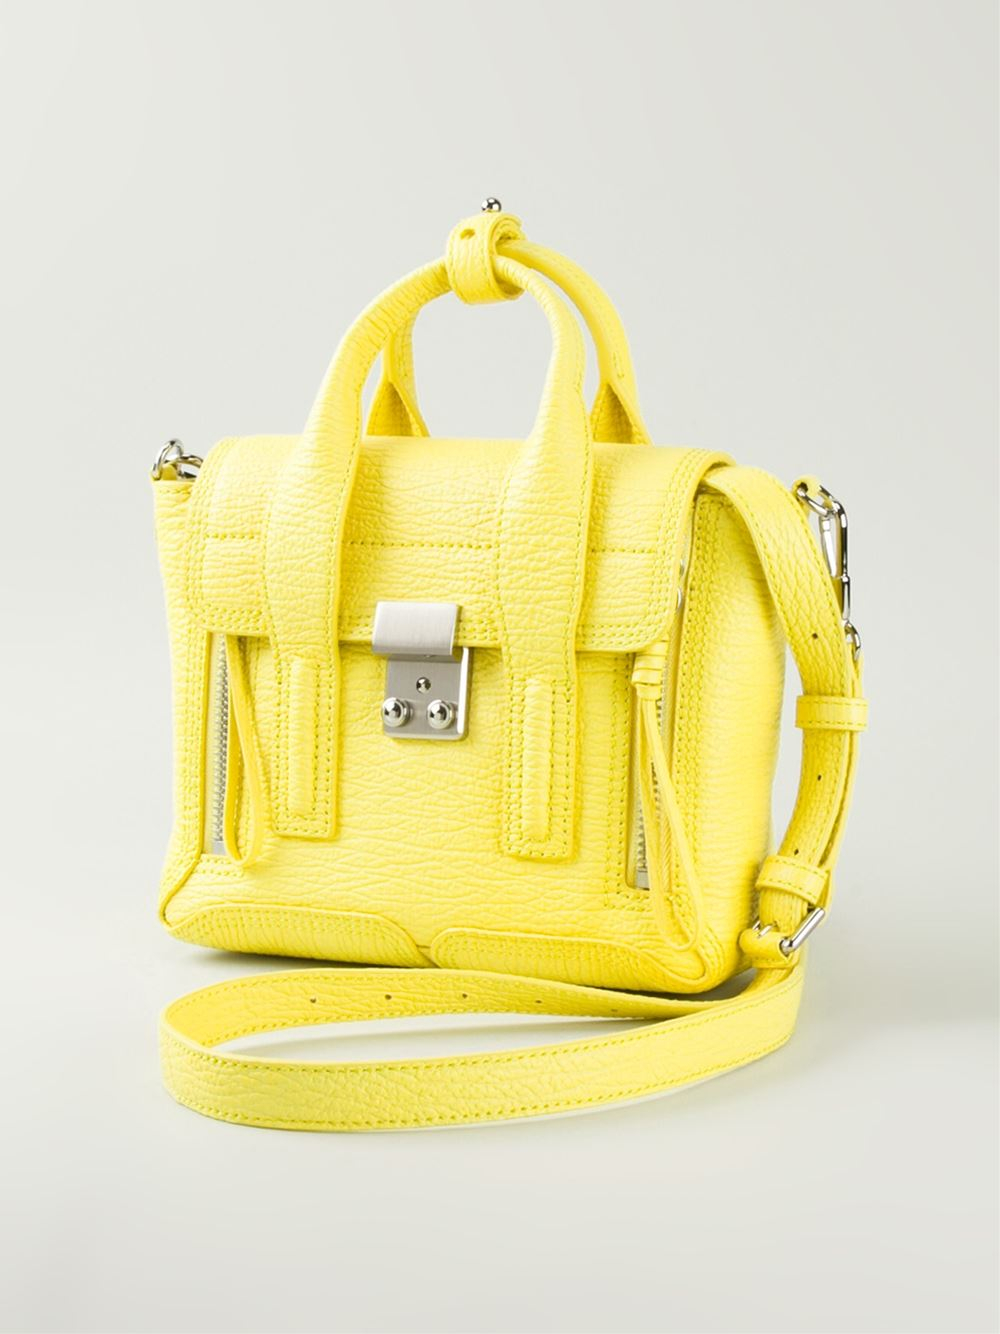 3.1 Phillip Lim Pashli Small Leather Cross-Body Bag in Yellow & Orange (Yellow) - Lyst